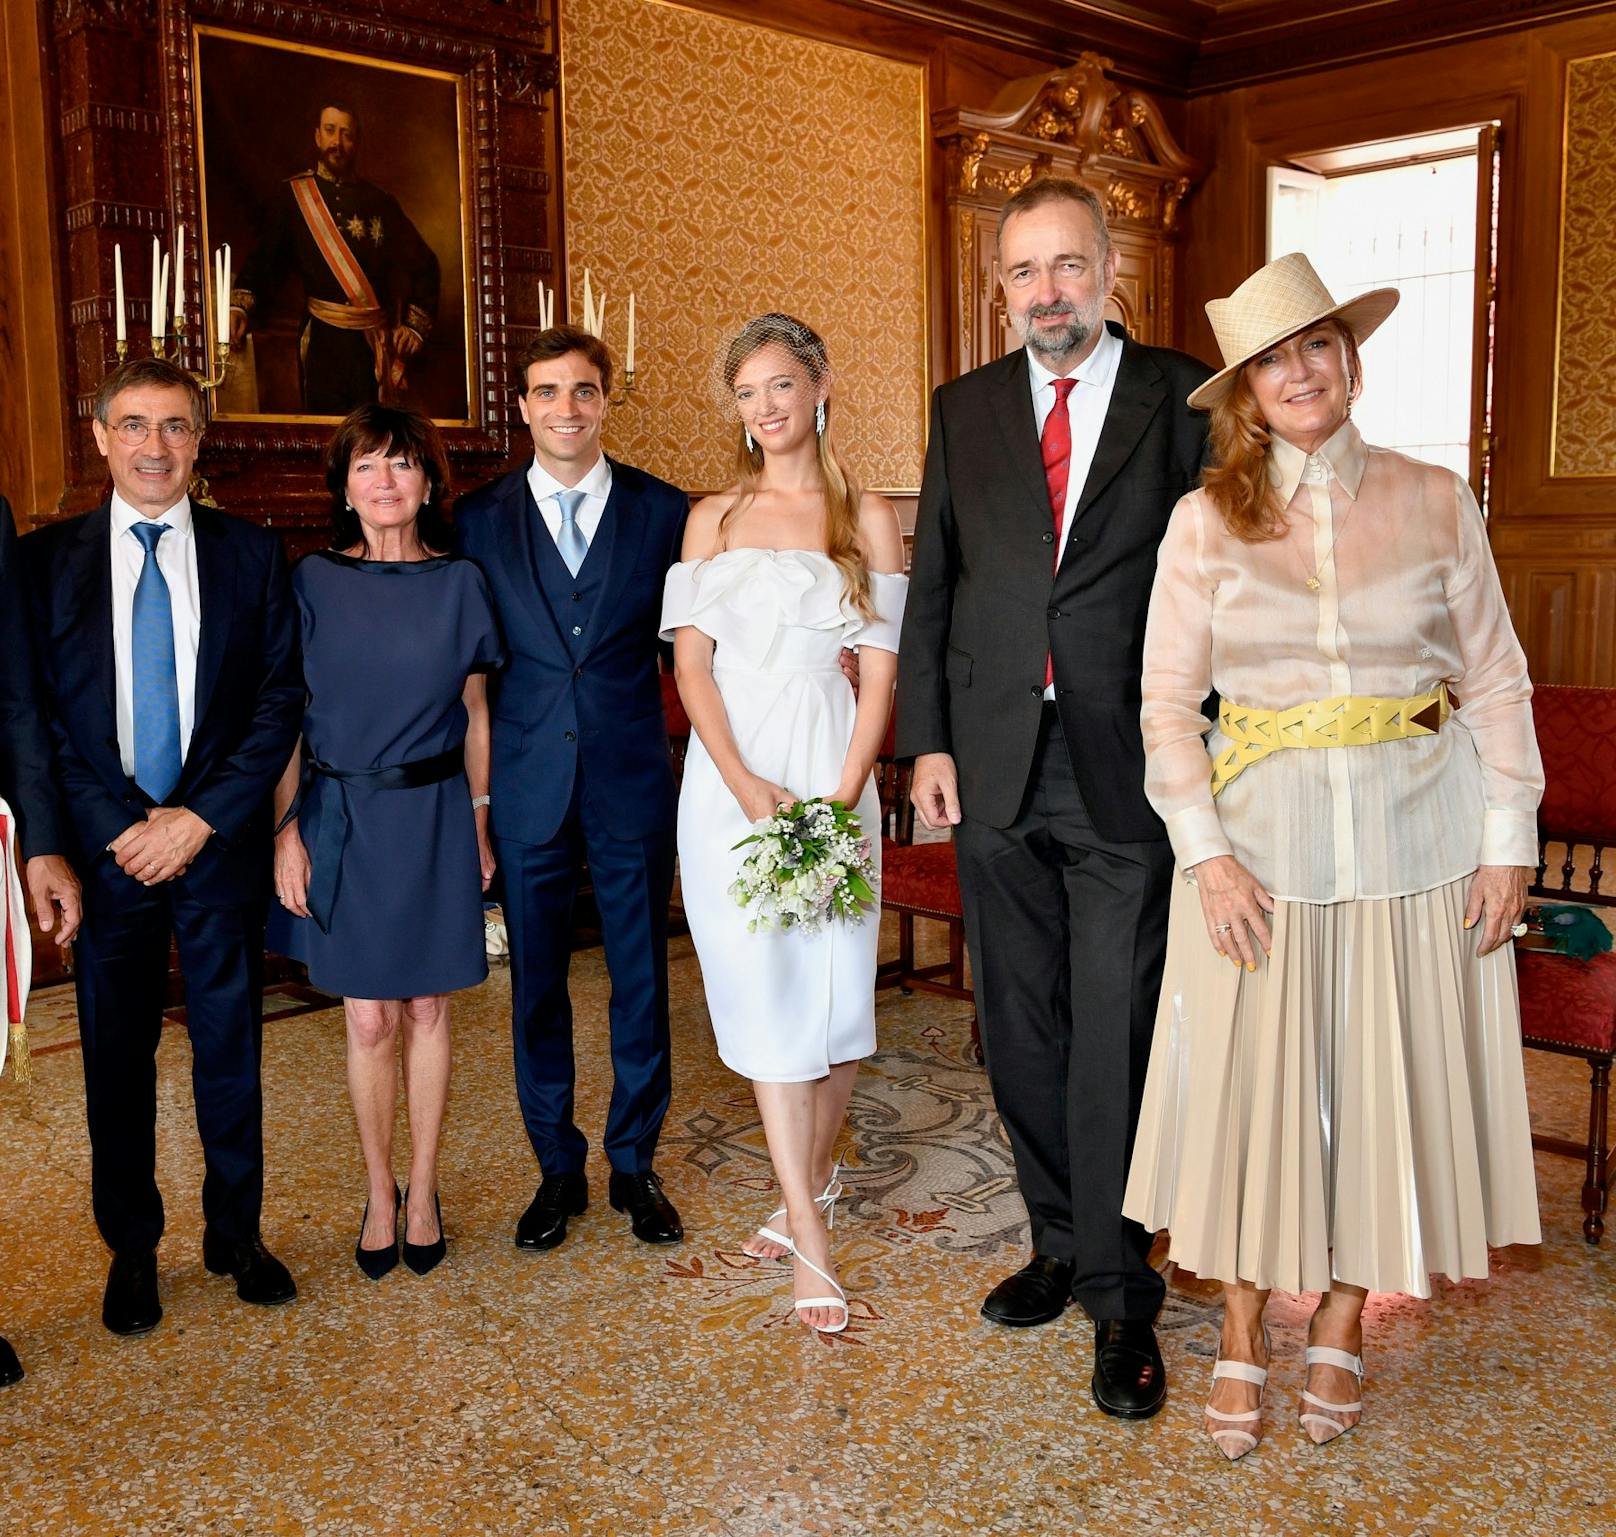 Kaiserurenkelin Eleonore Habsburg heiratet Rennfahrer